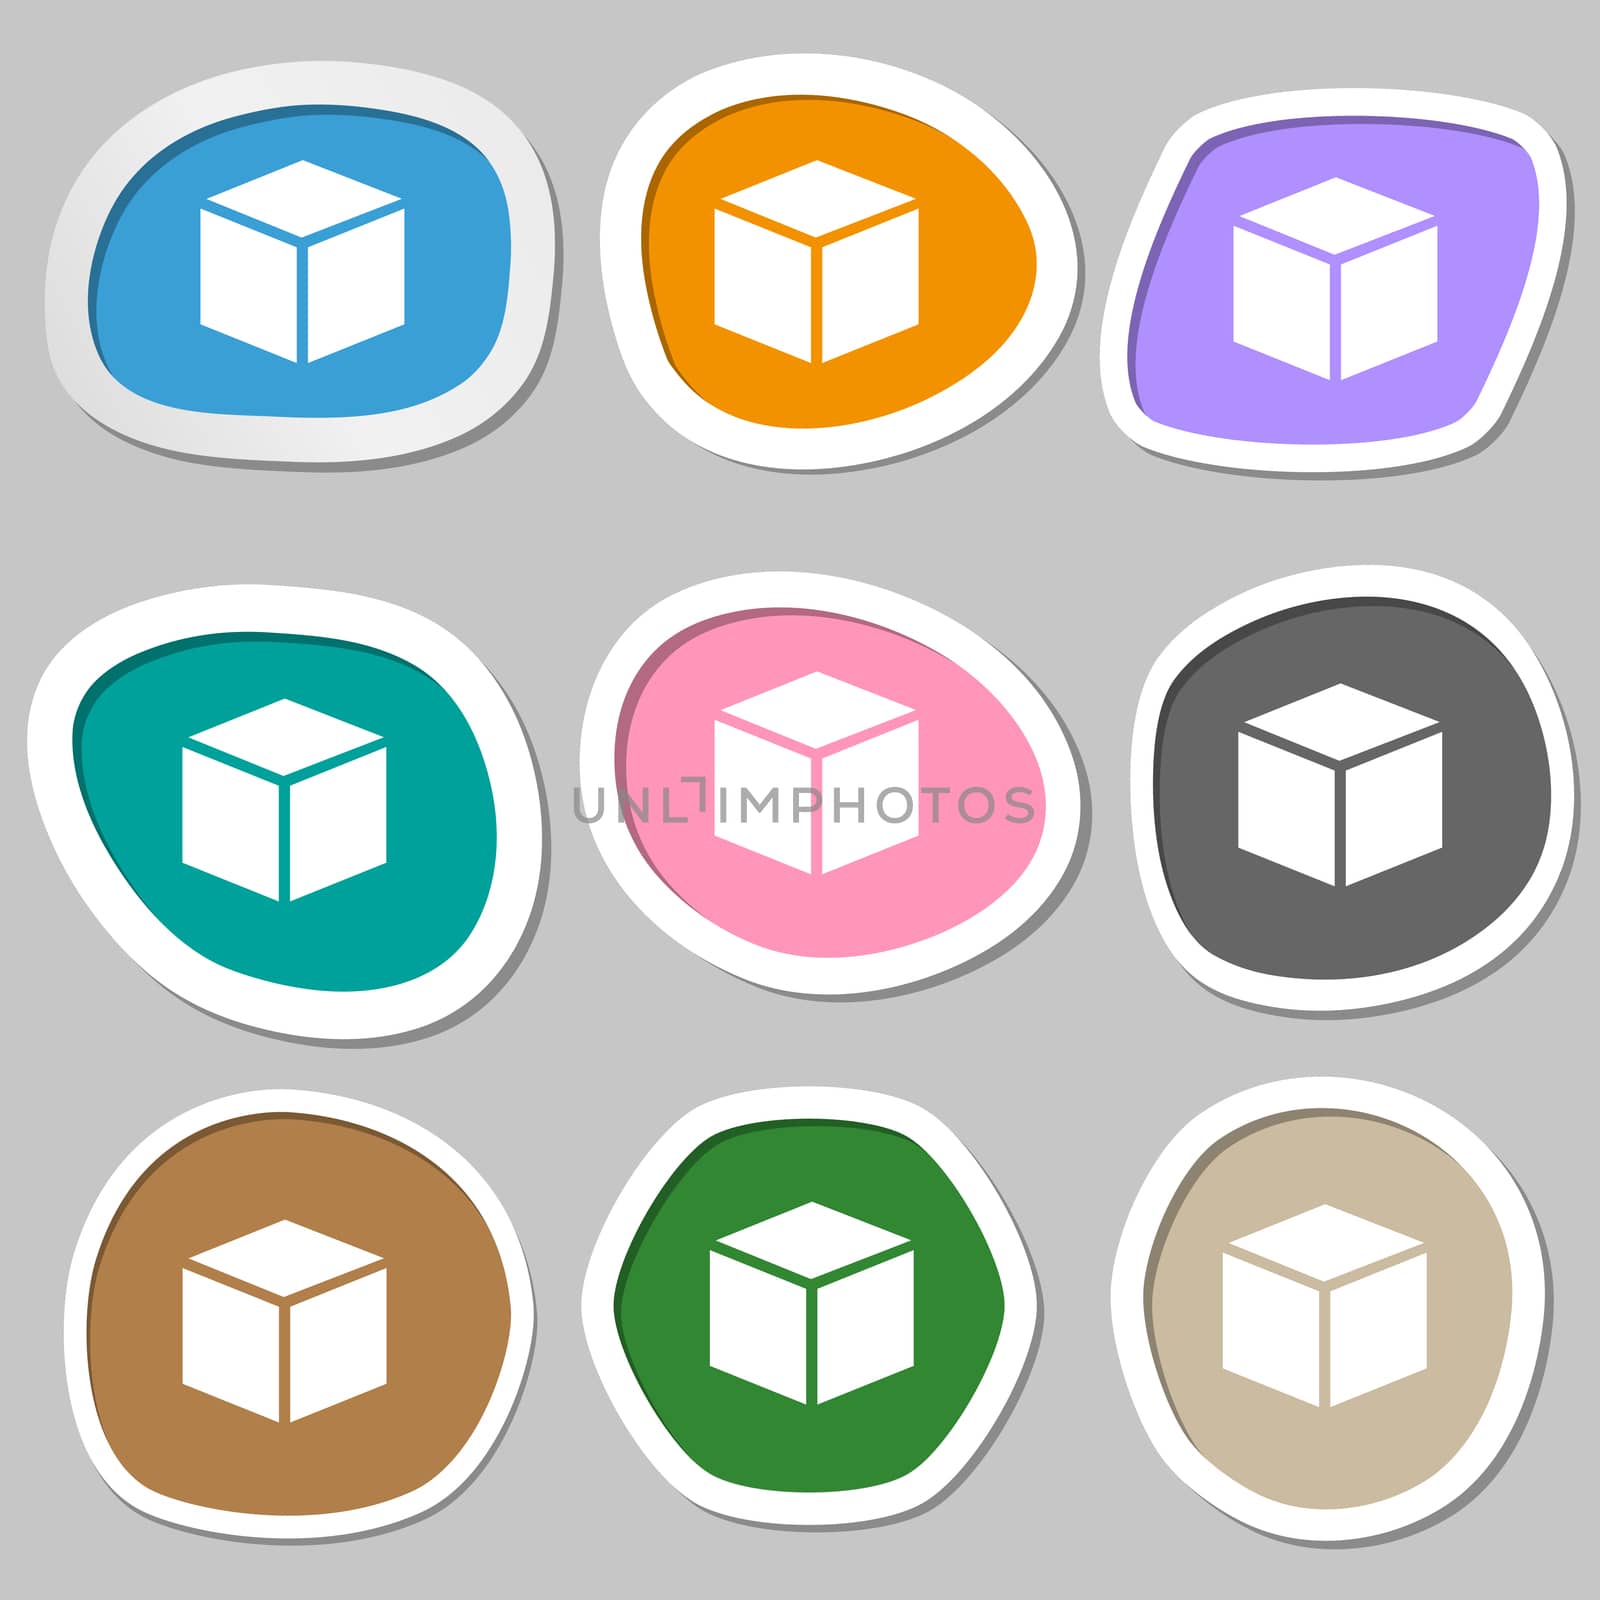 3d cube icon sign. Multicolored paper stickers. illustration